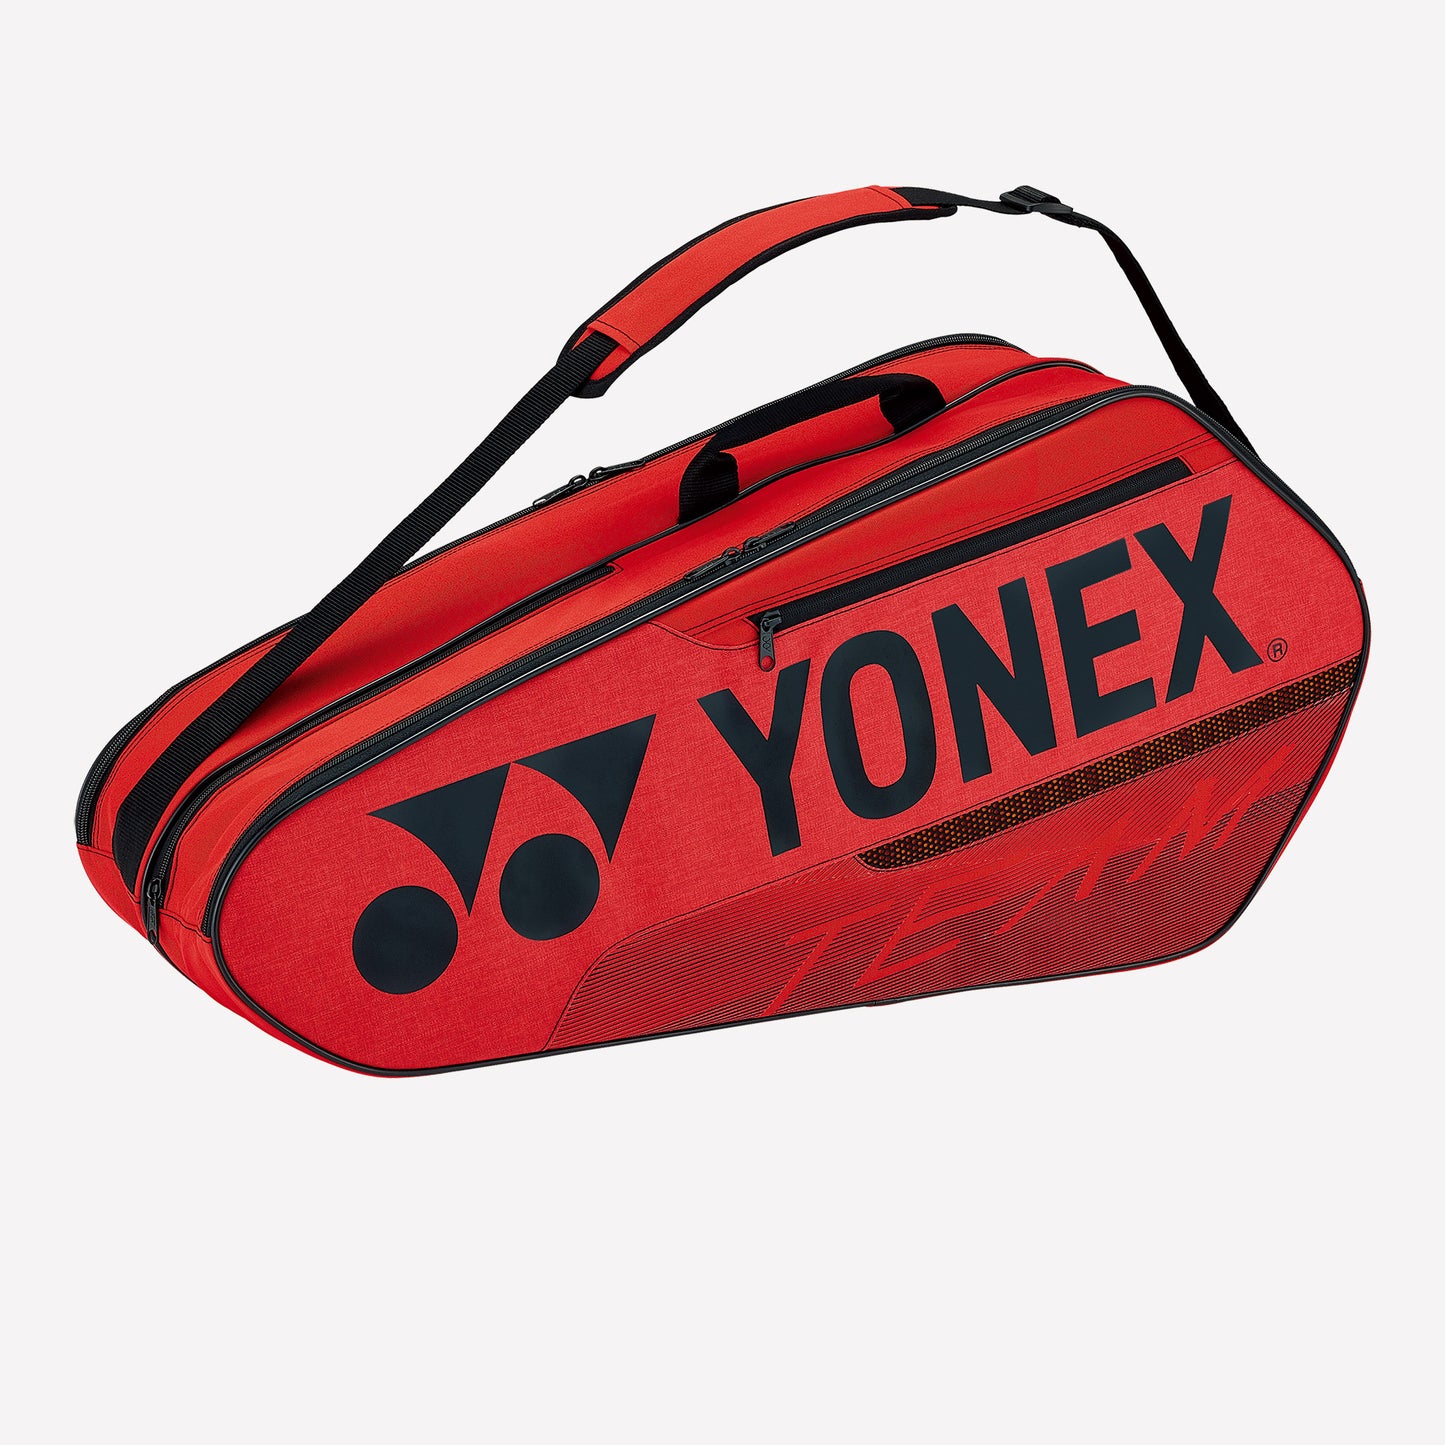 Yonex Team Racket X6 Tennis Bag Red (1)